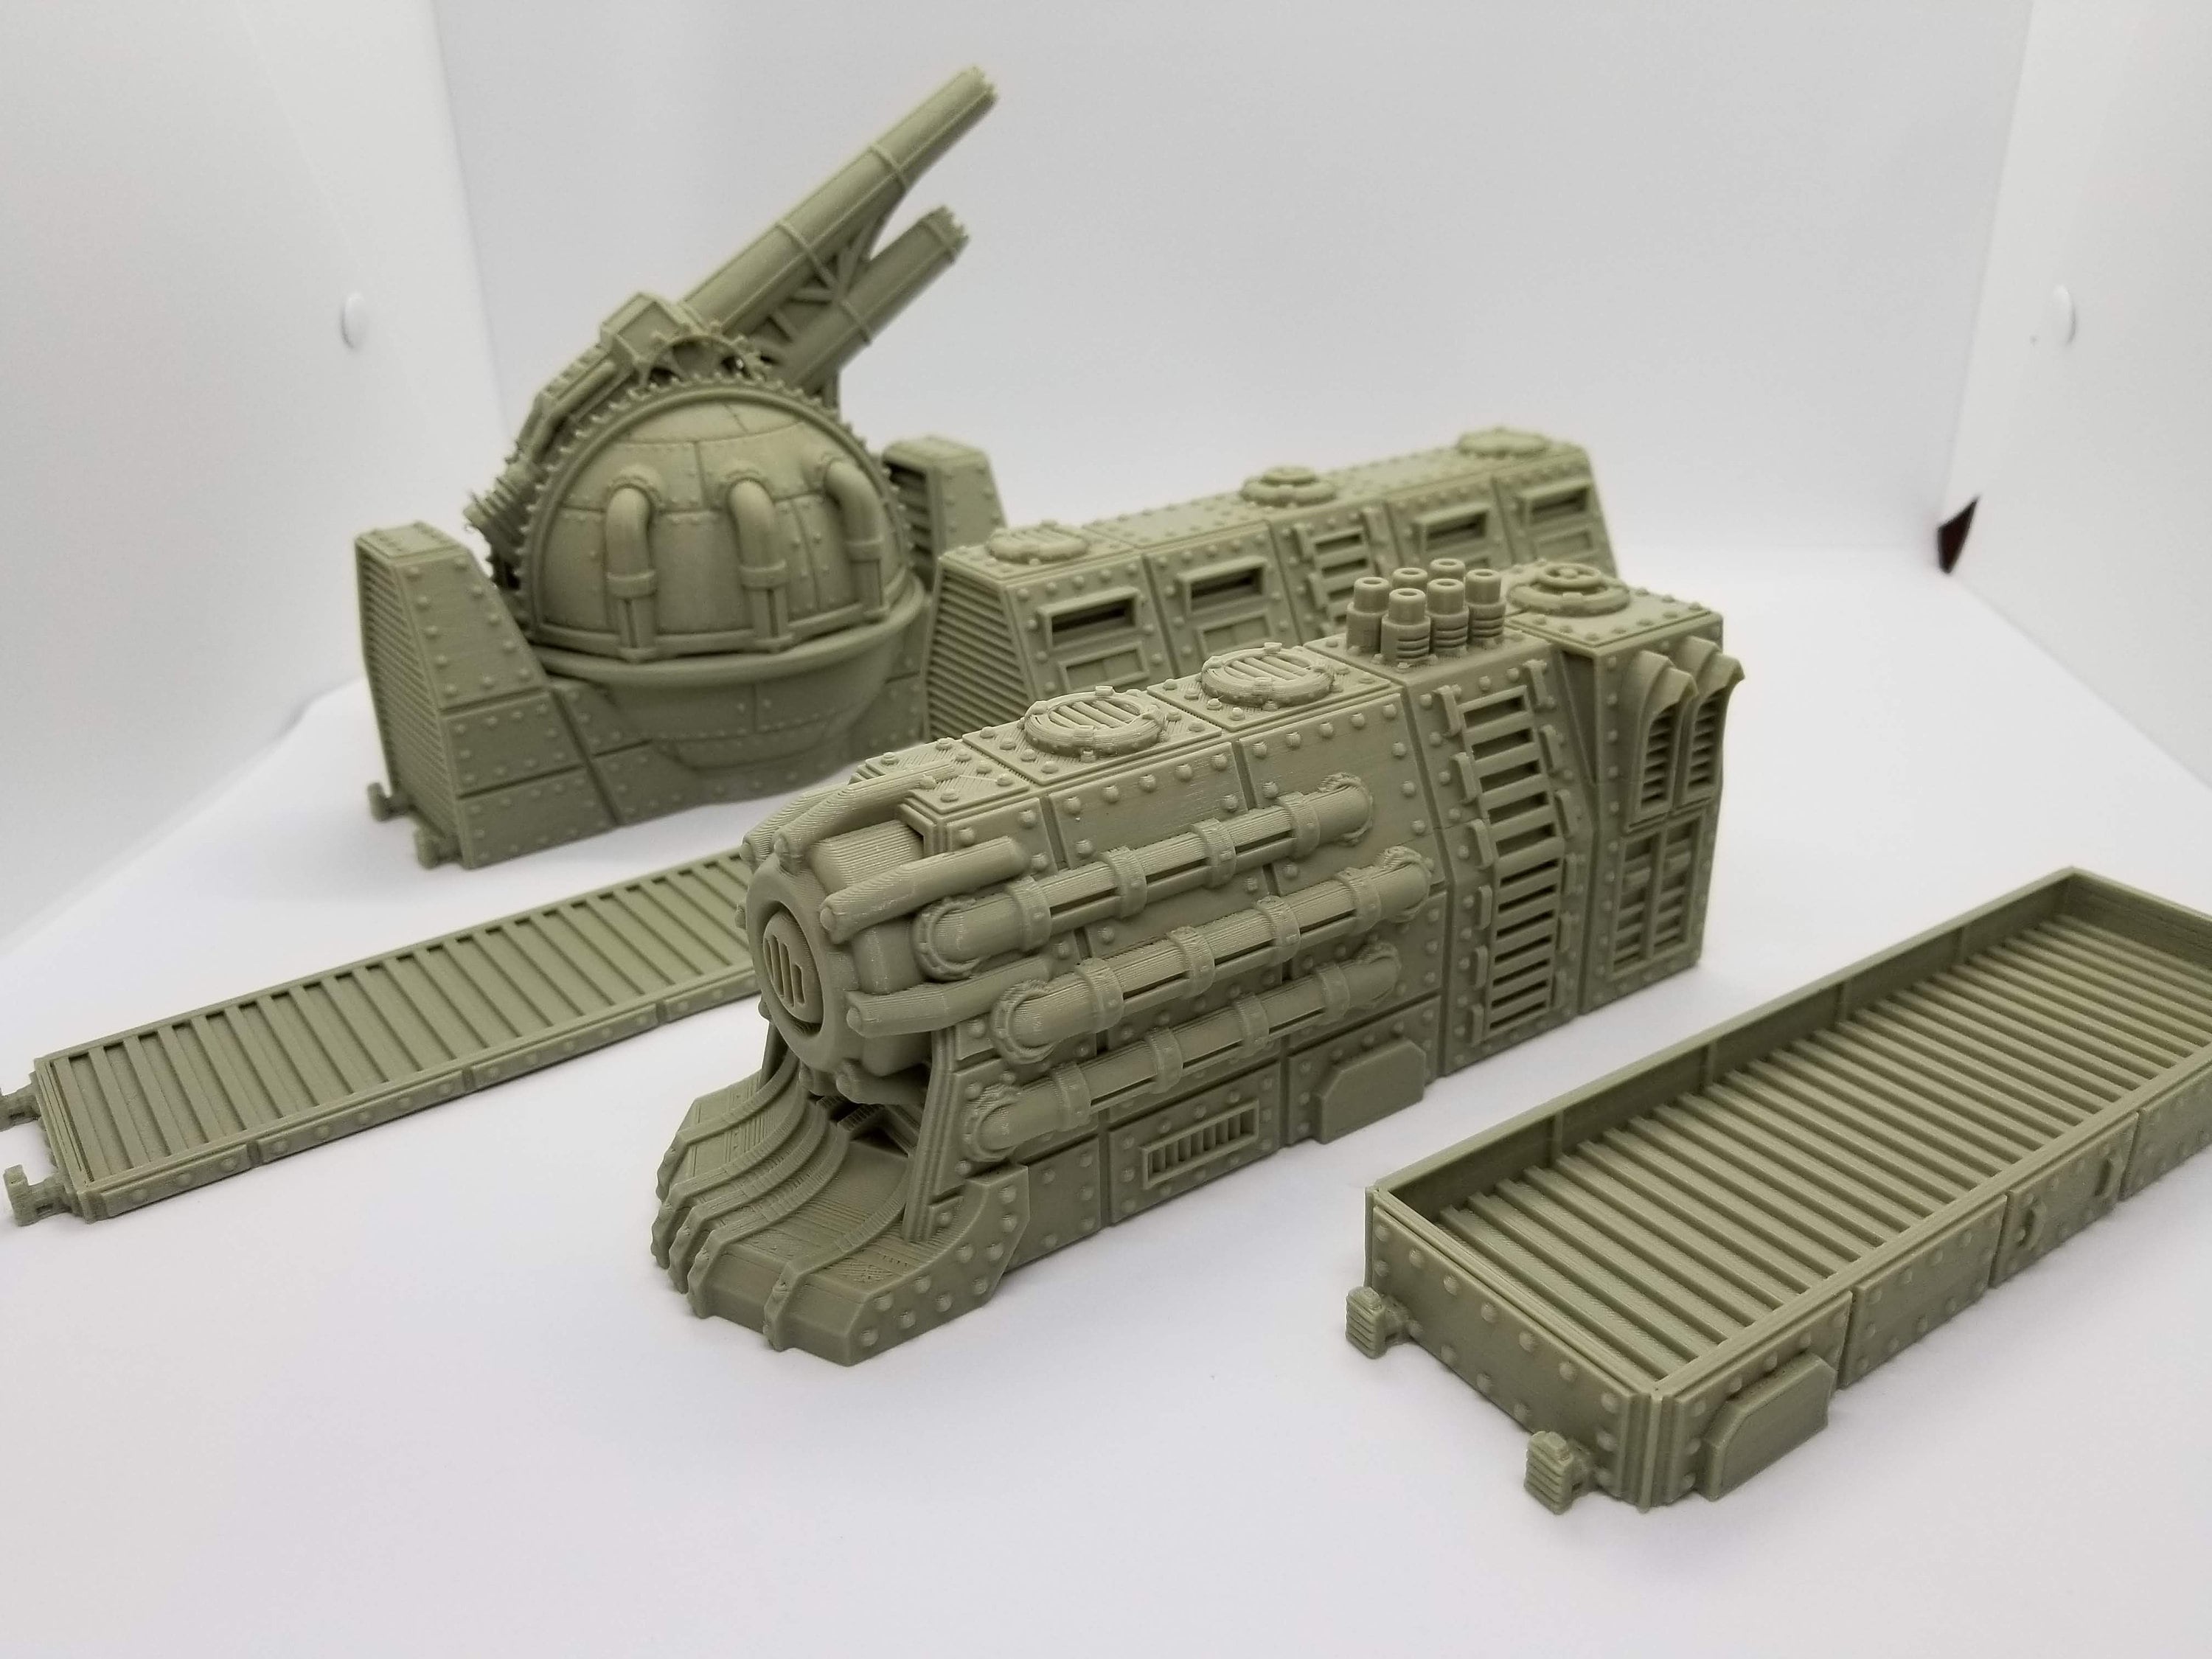 Sci-Fi Gothic Train / 28mm Wargaming Terrain / Warlayer /Print to Order / 3d Printed/Licensed Printer